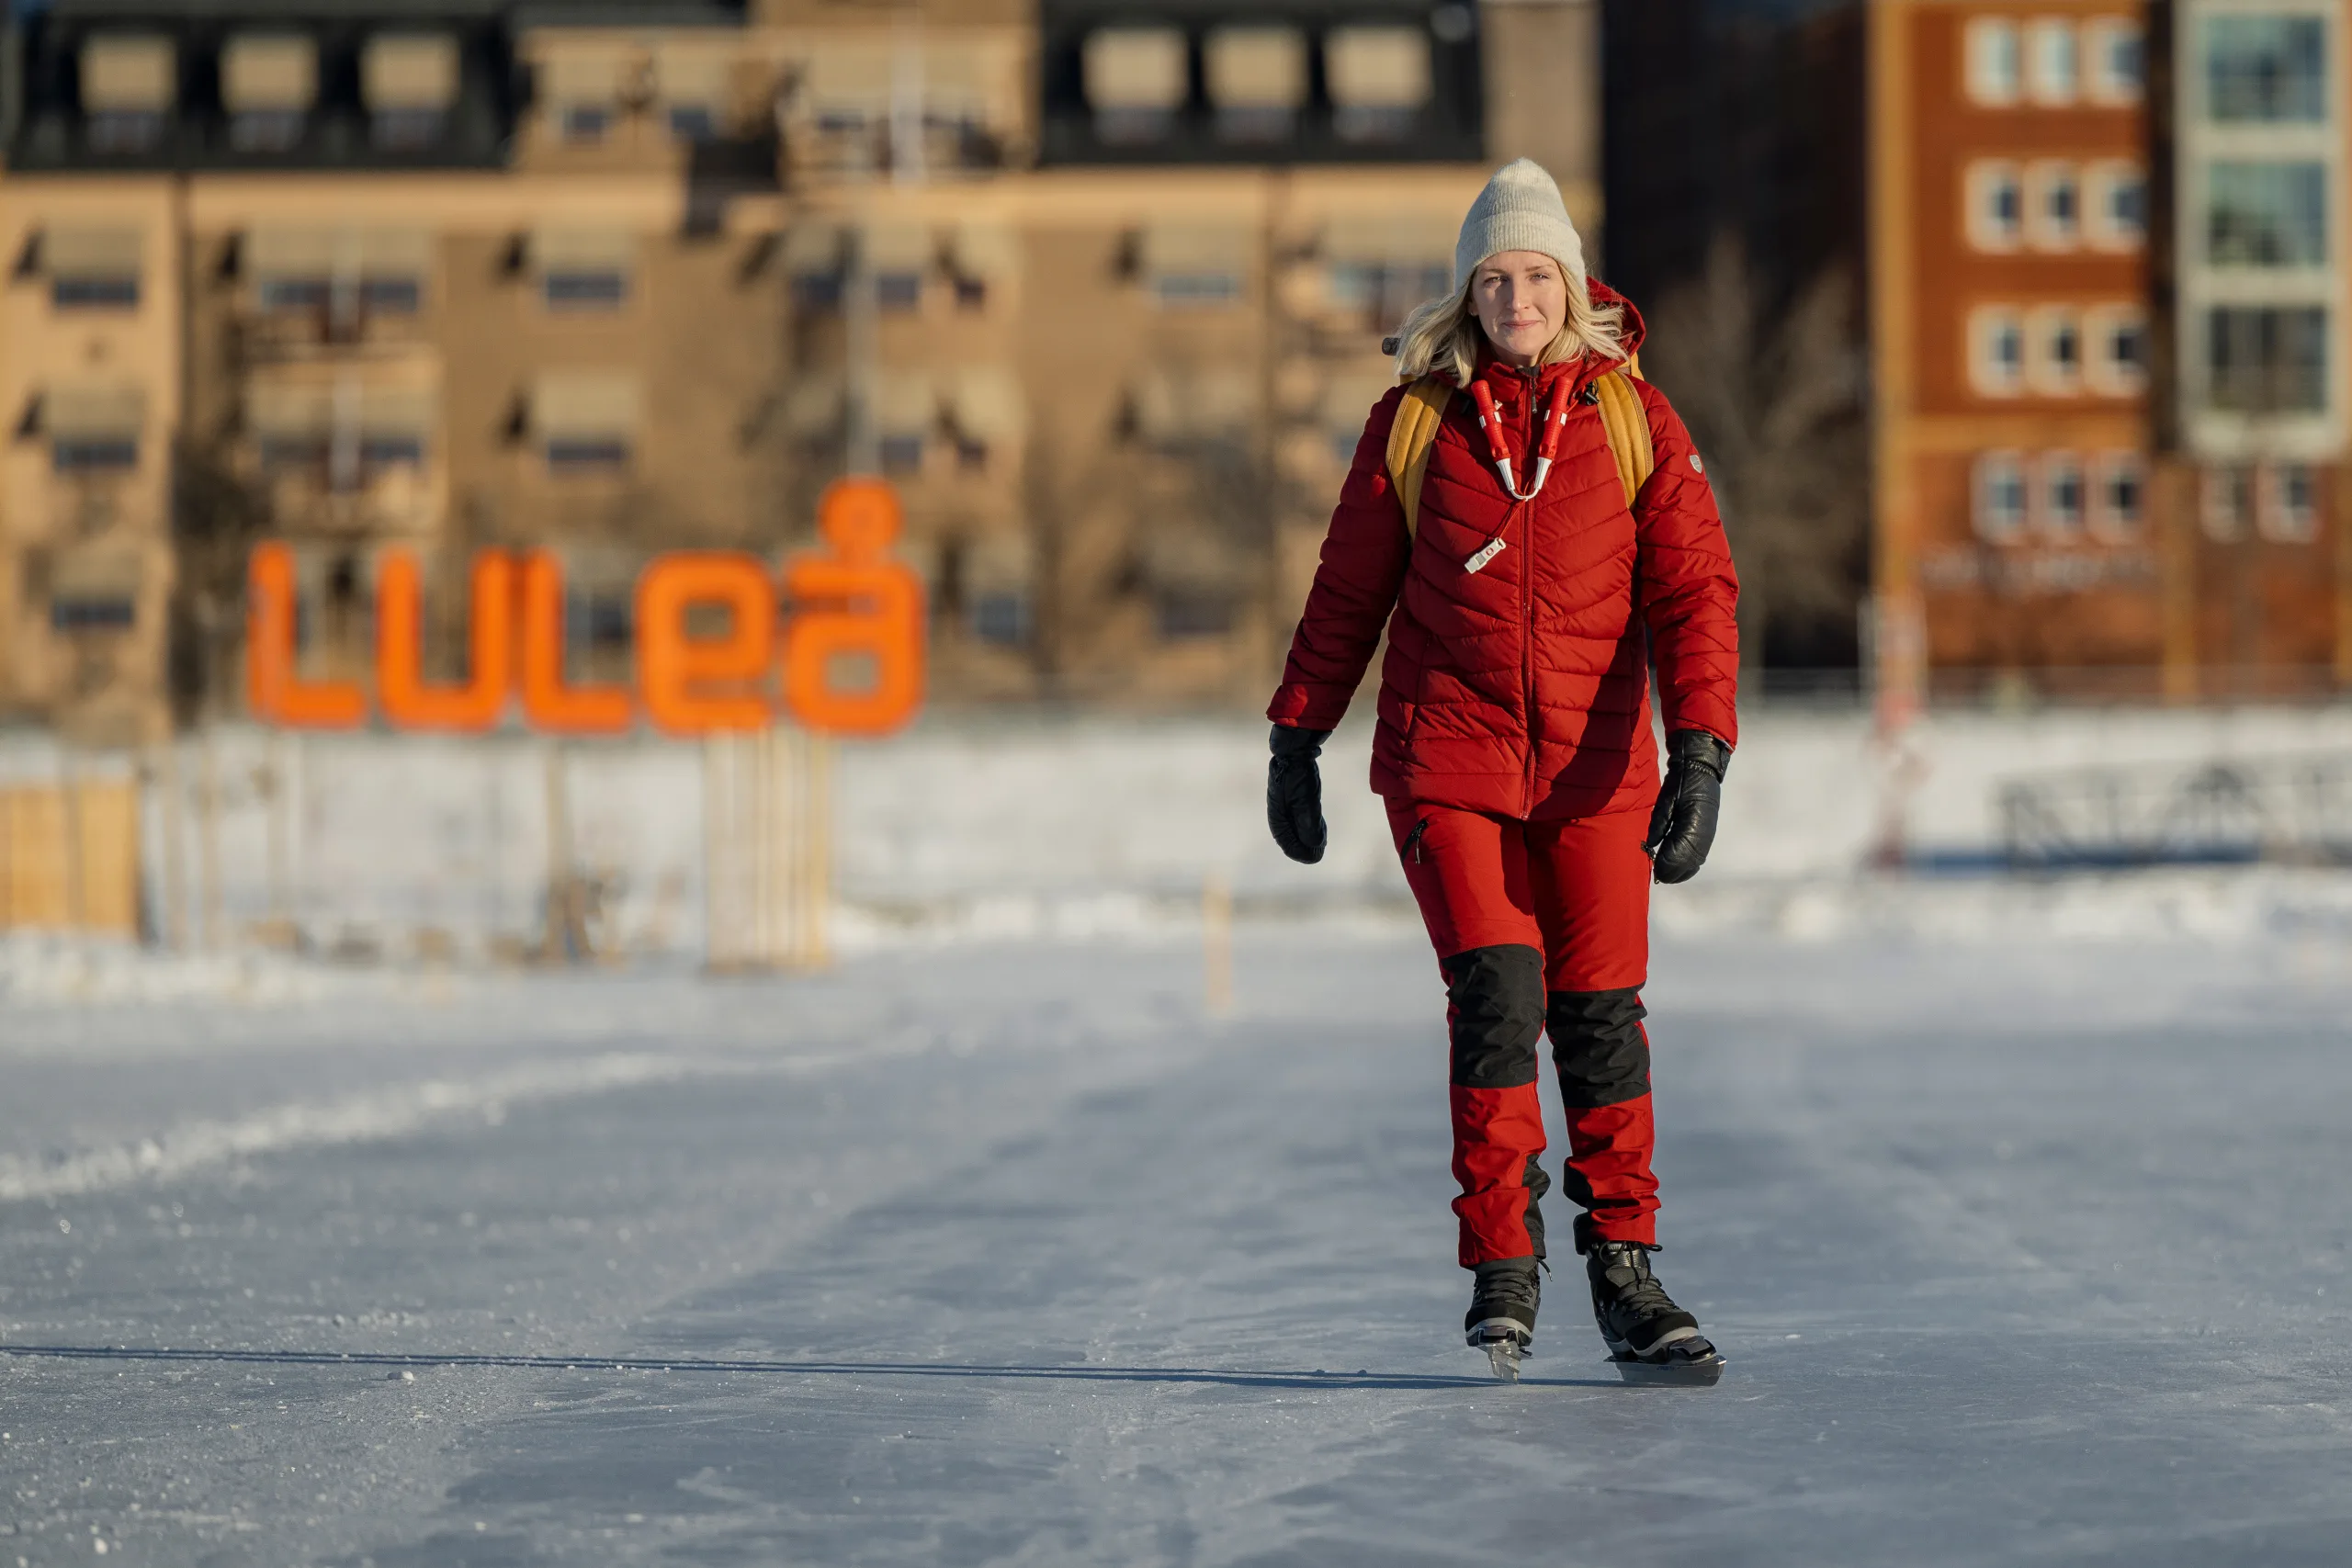 Kvinna åker skridskor, med Luleå-skylt i bakgrunden